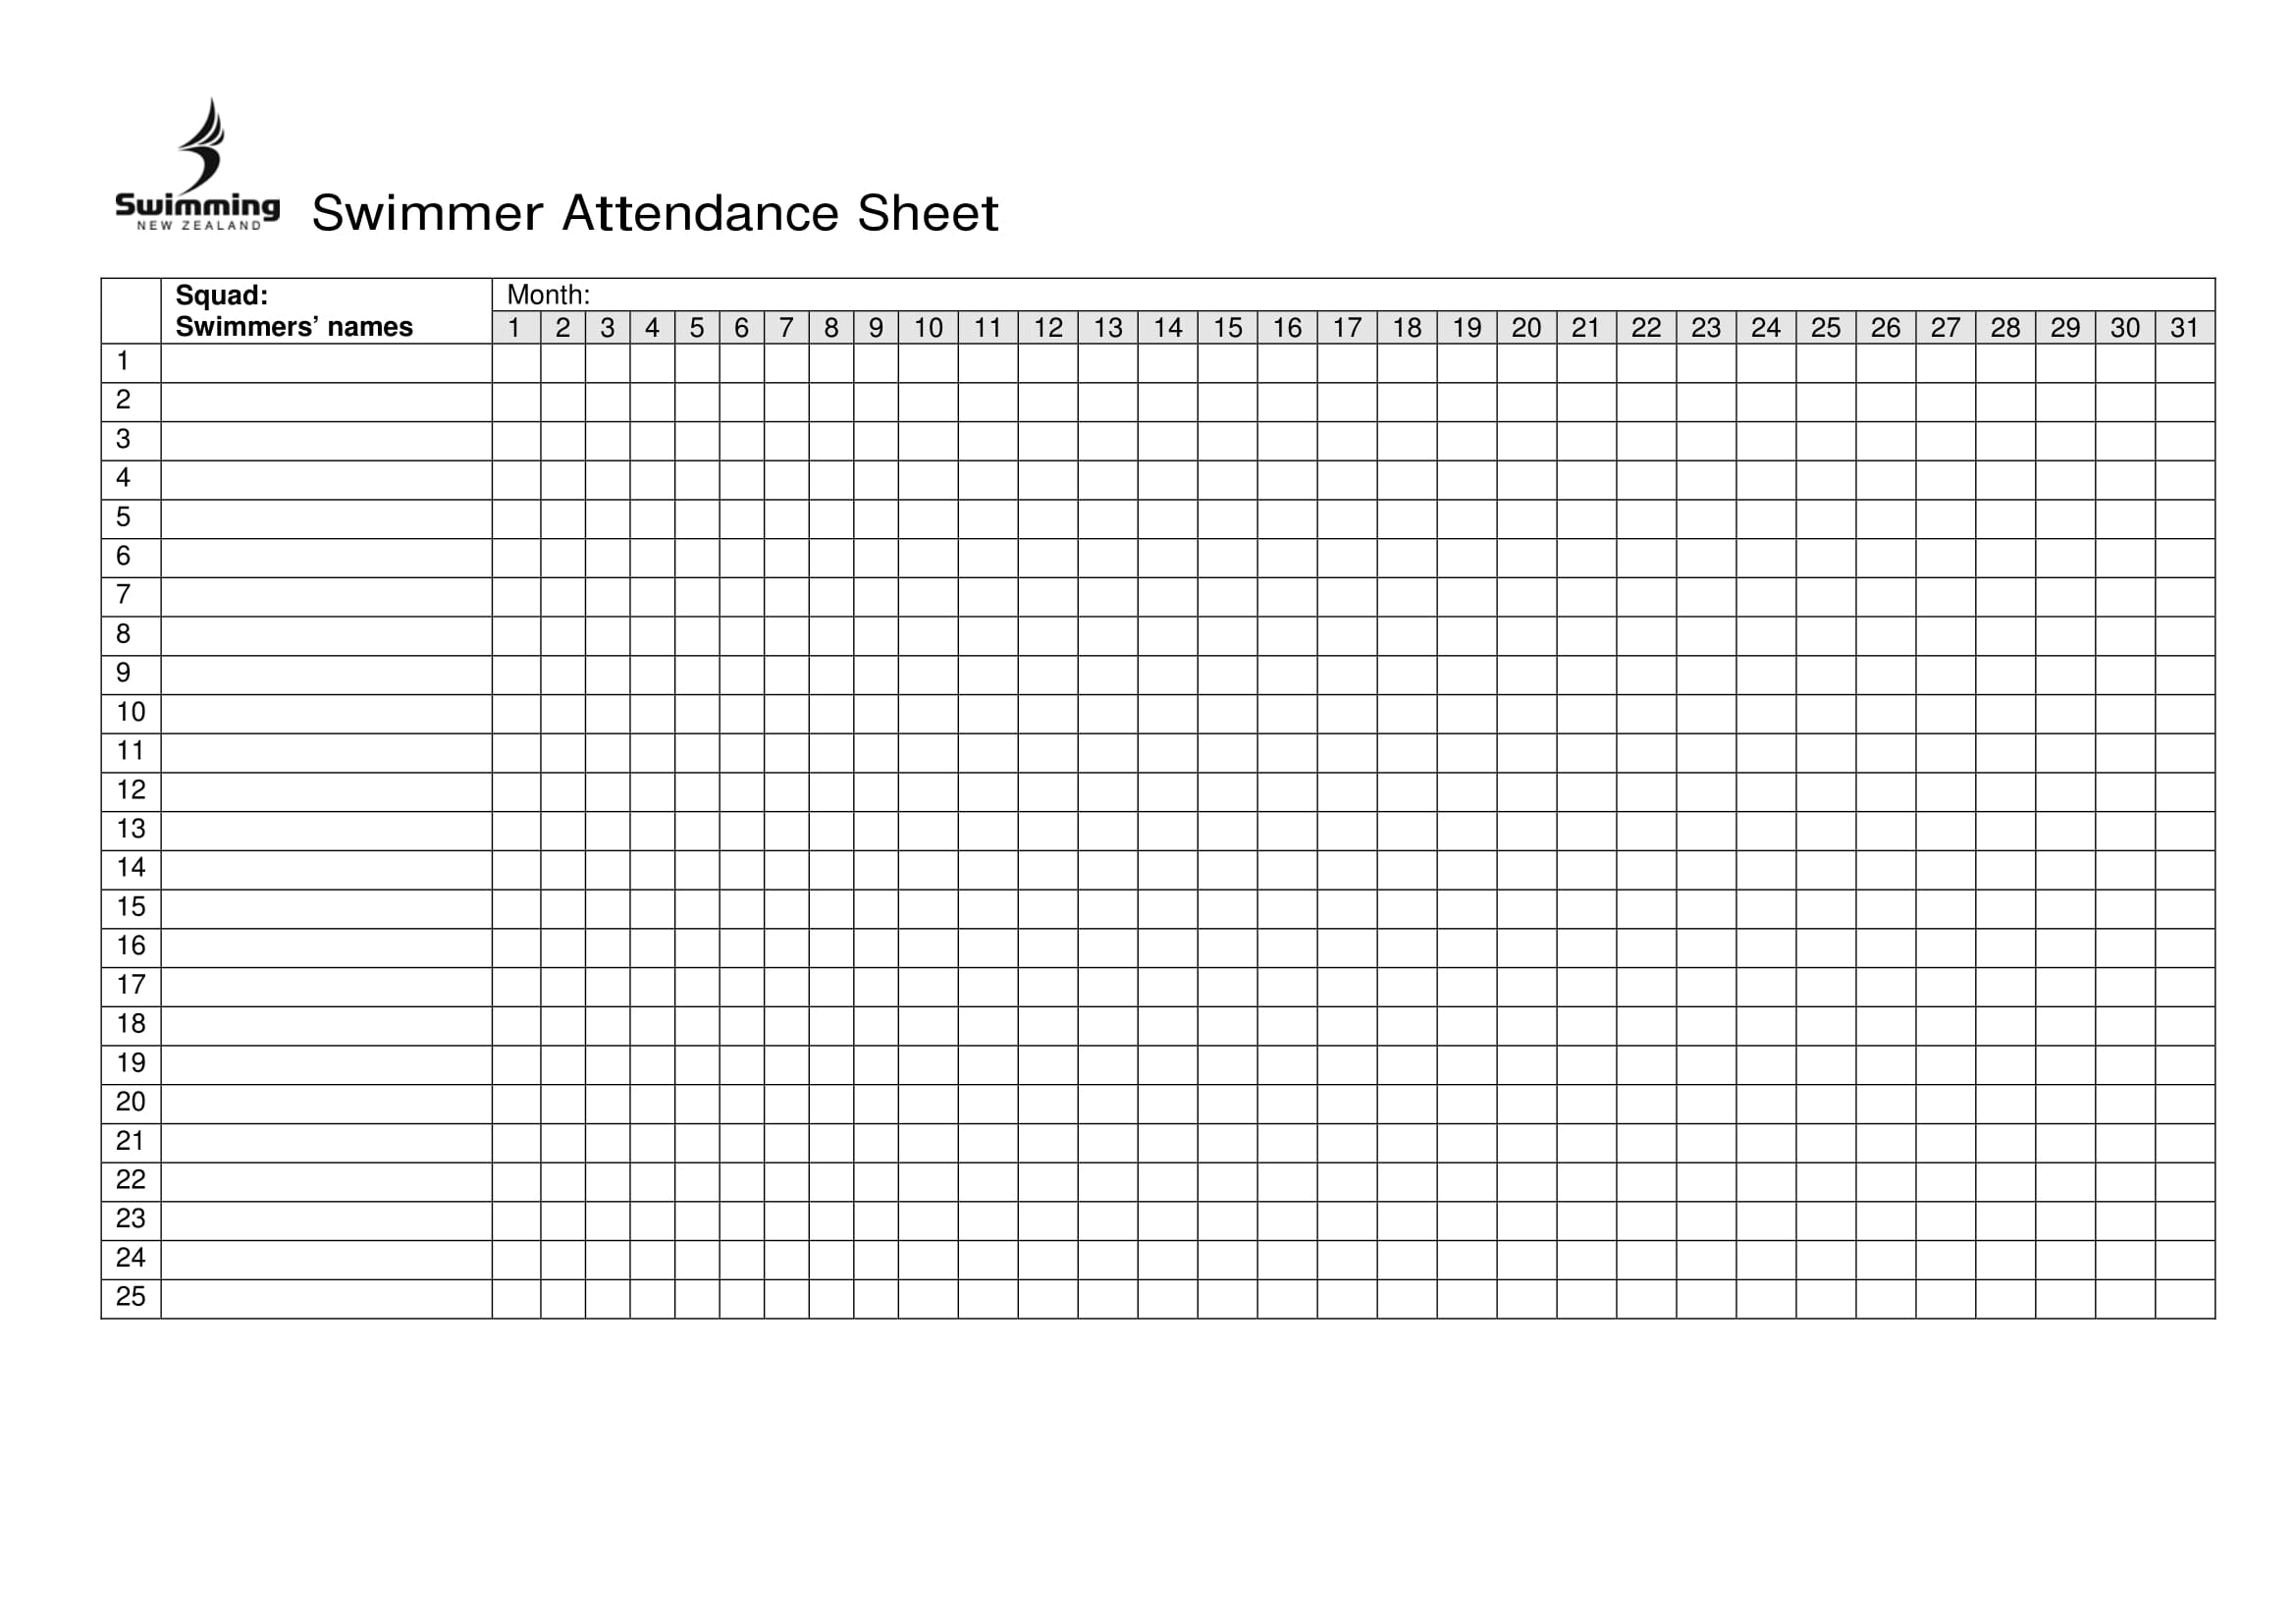 Blank Attendance Sheet by Crafty Aquarius Design | TpT